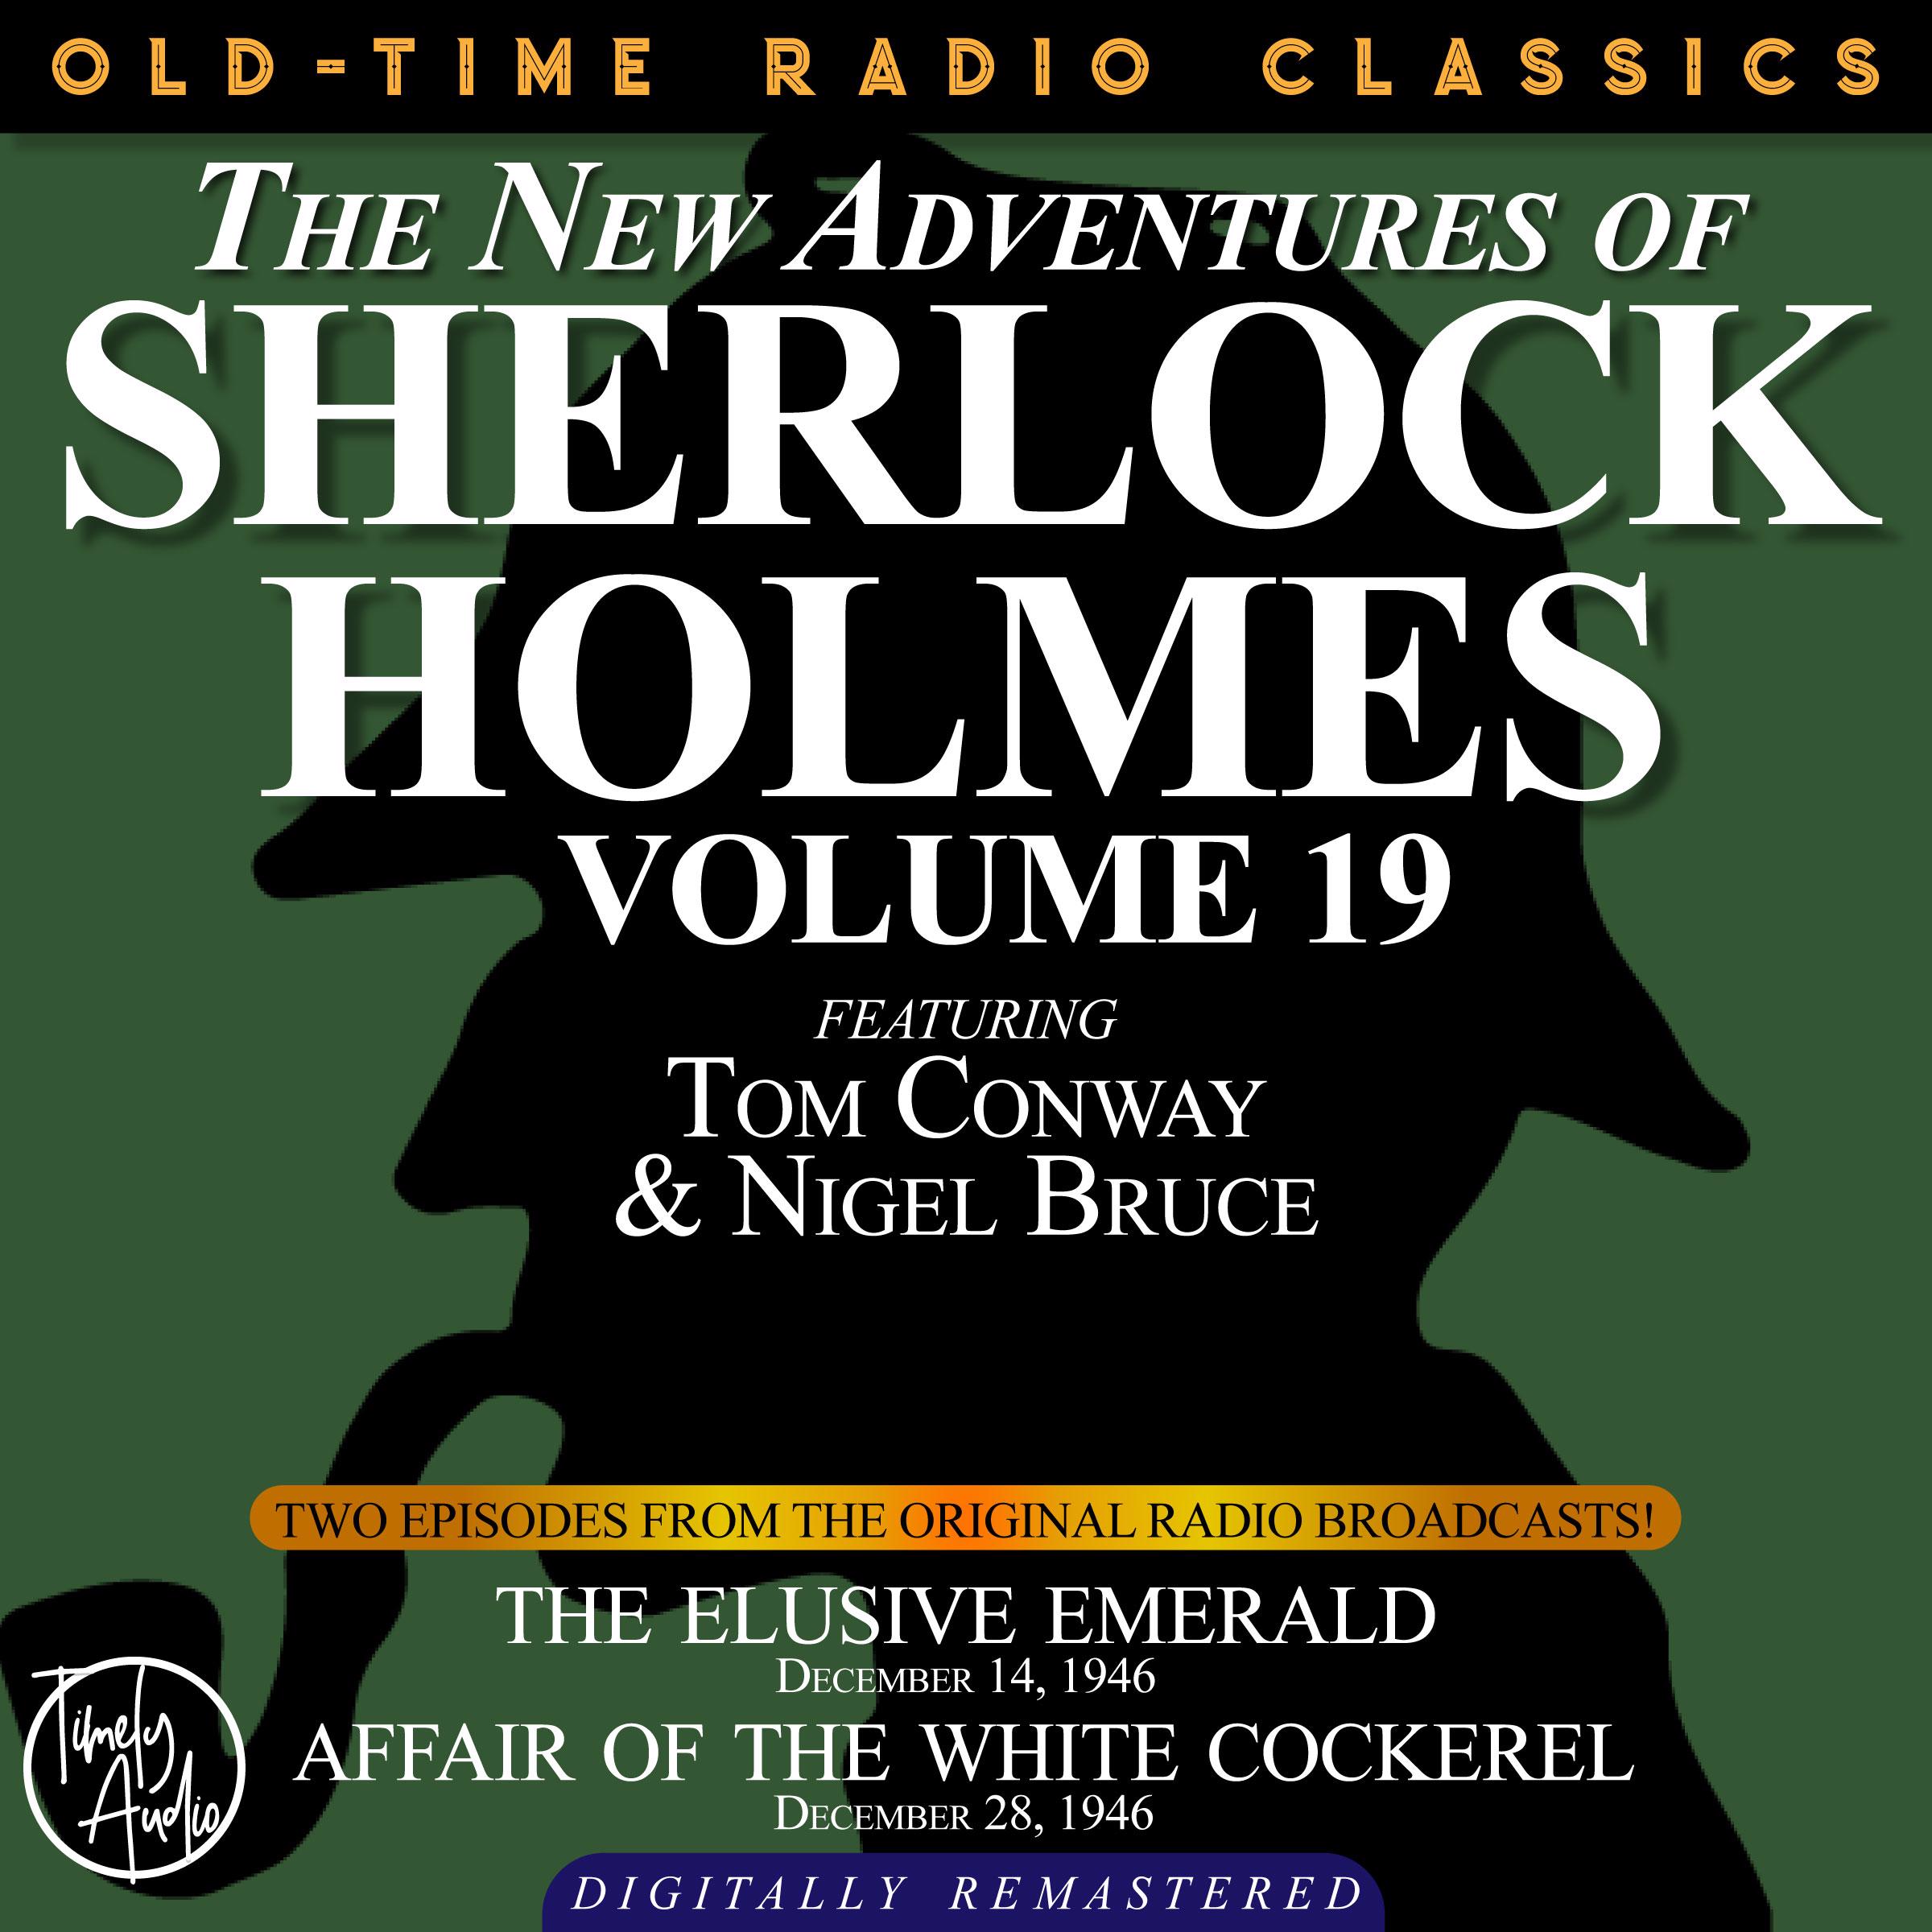 THE NEW ADVENTURES OF SHERLOCK HOLMES, VOLUME 19